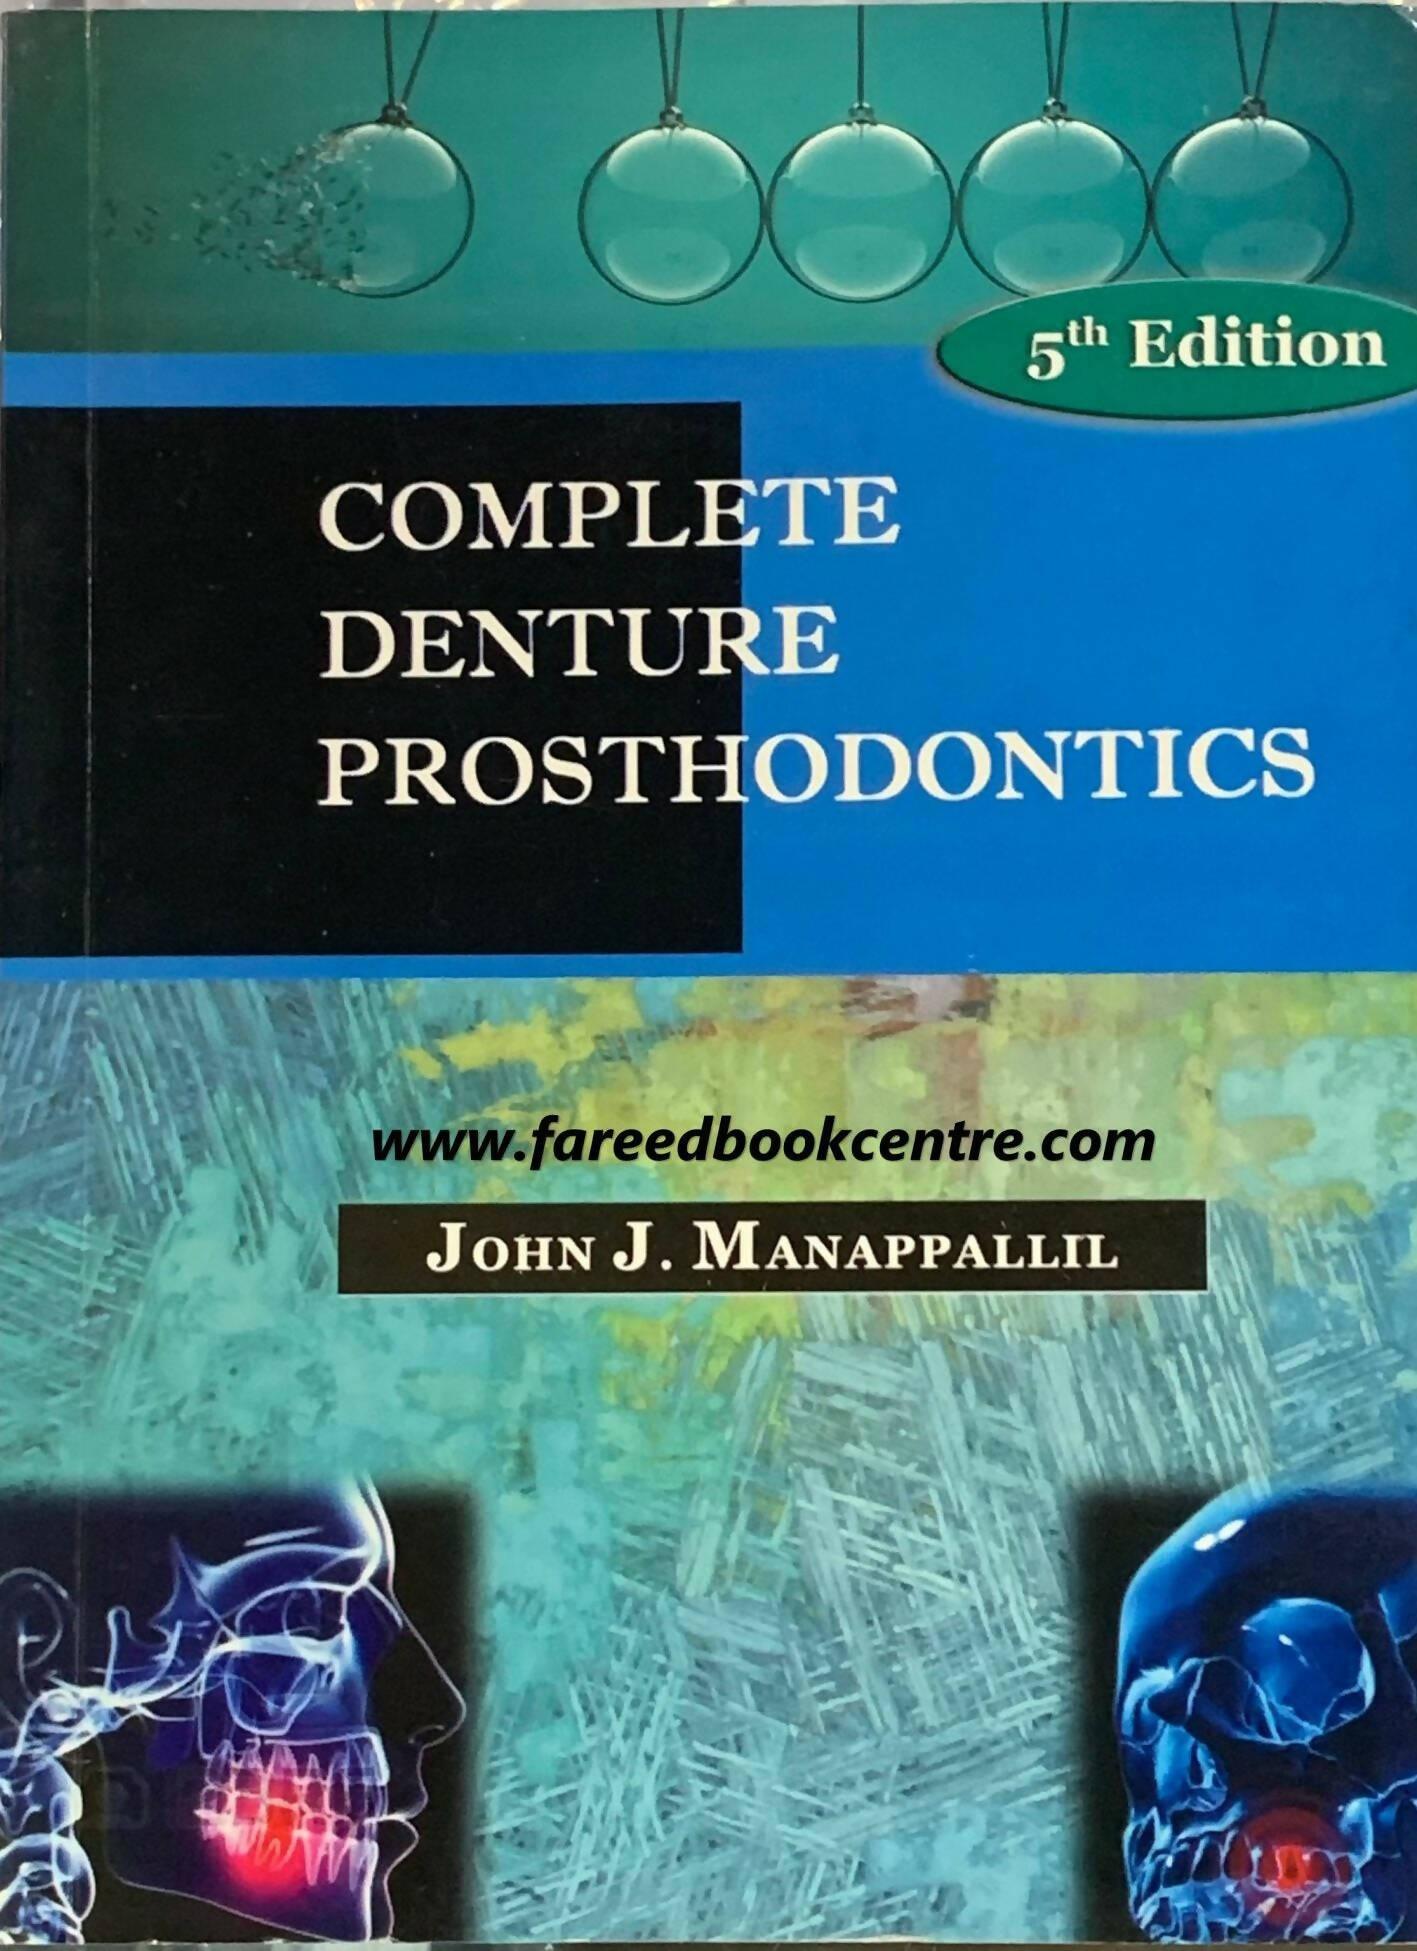 Complete Denture Prosthodontice By John J. Manappallil 5th Edition - ValueBox